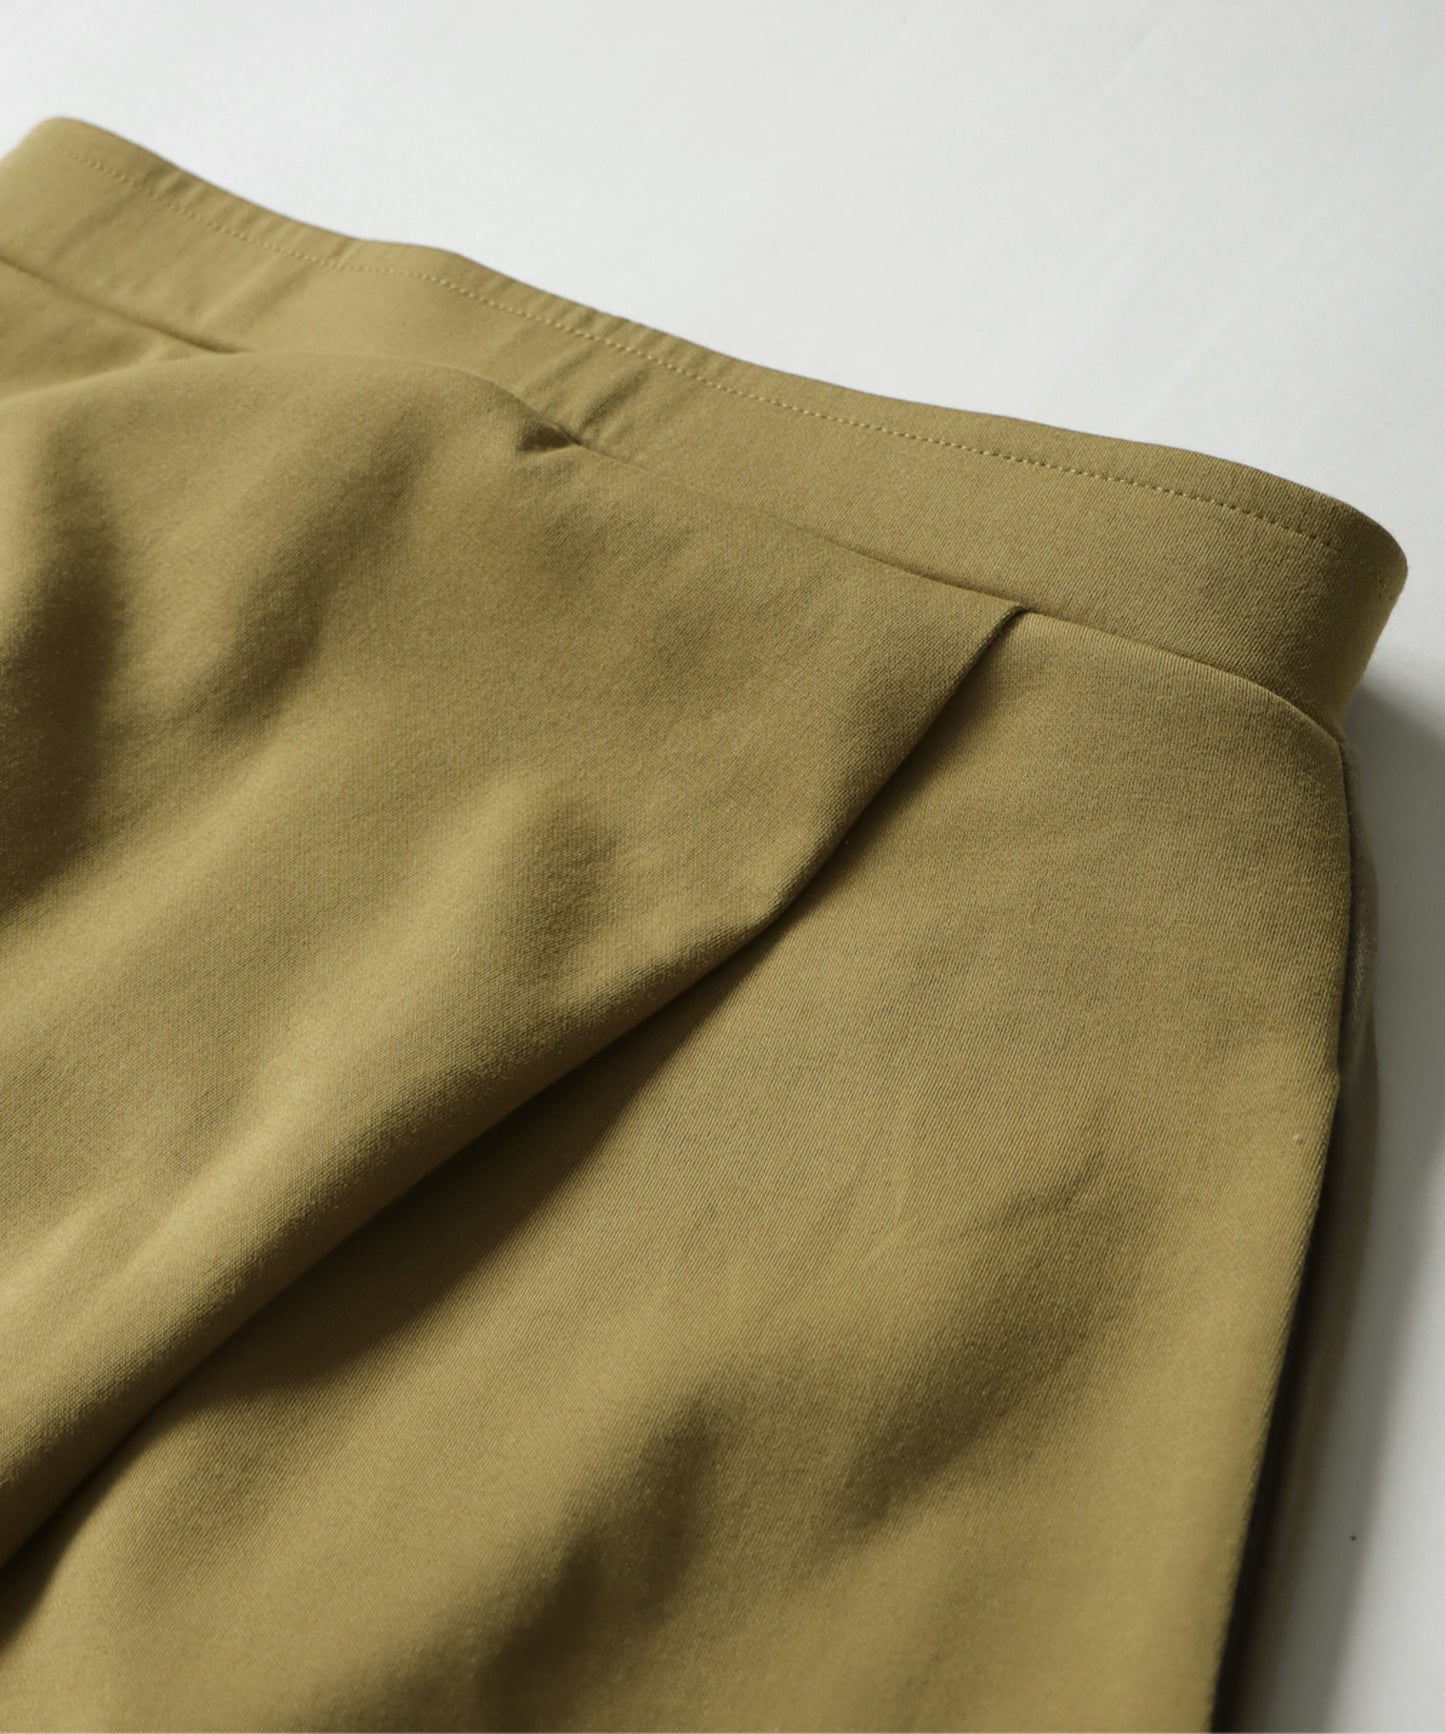 Ladies long skirt plain ponte fabric